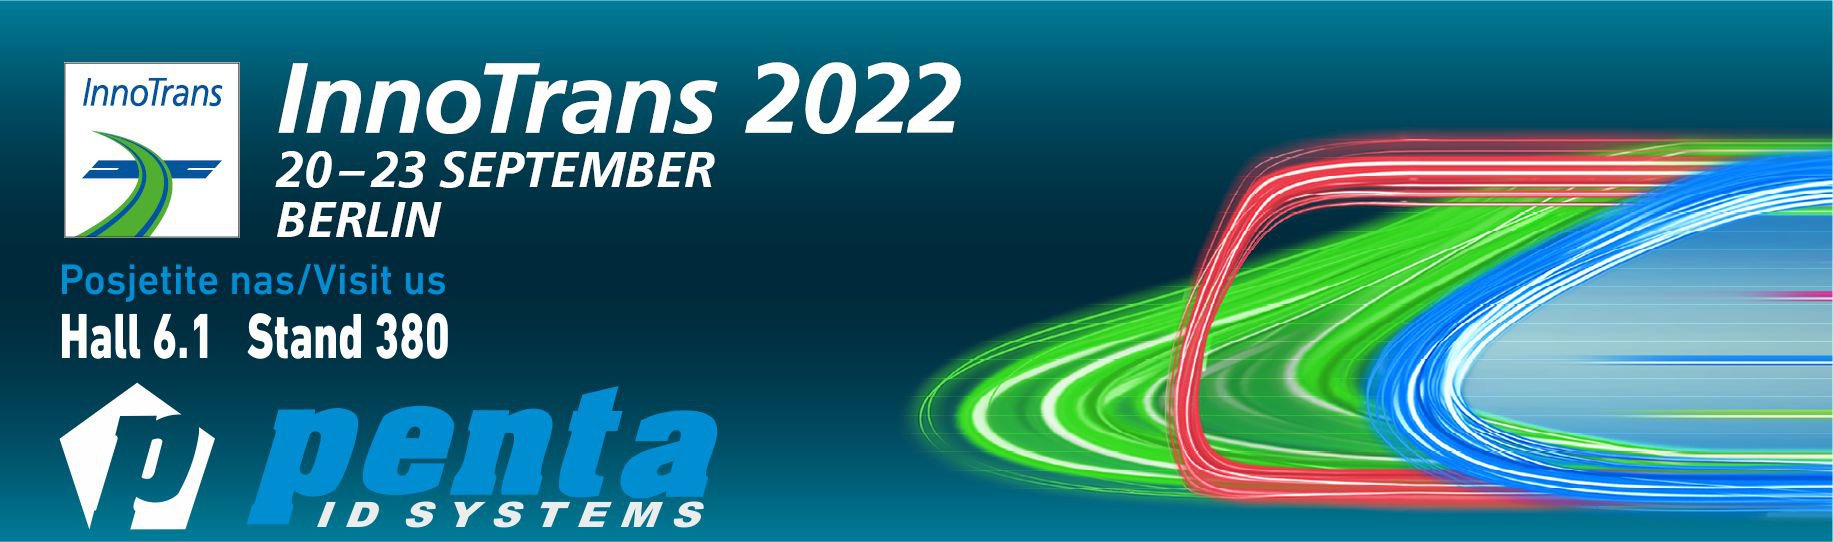 Visit us at INNOTRANS 2022 in Berlin, Germany